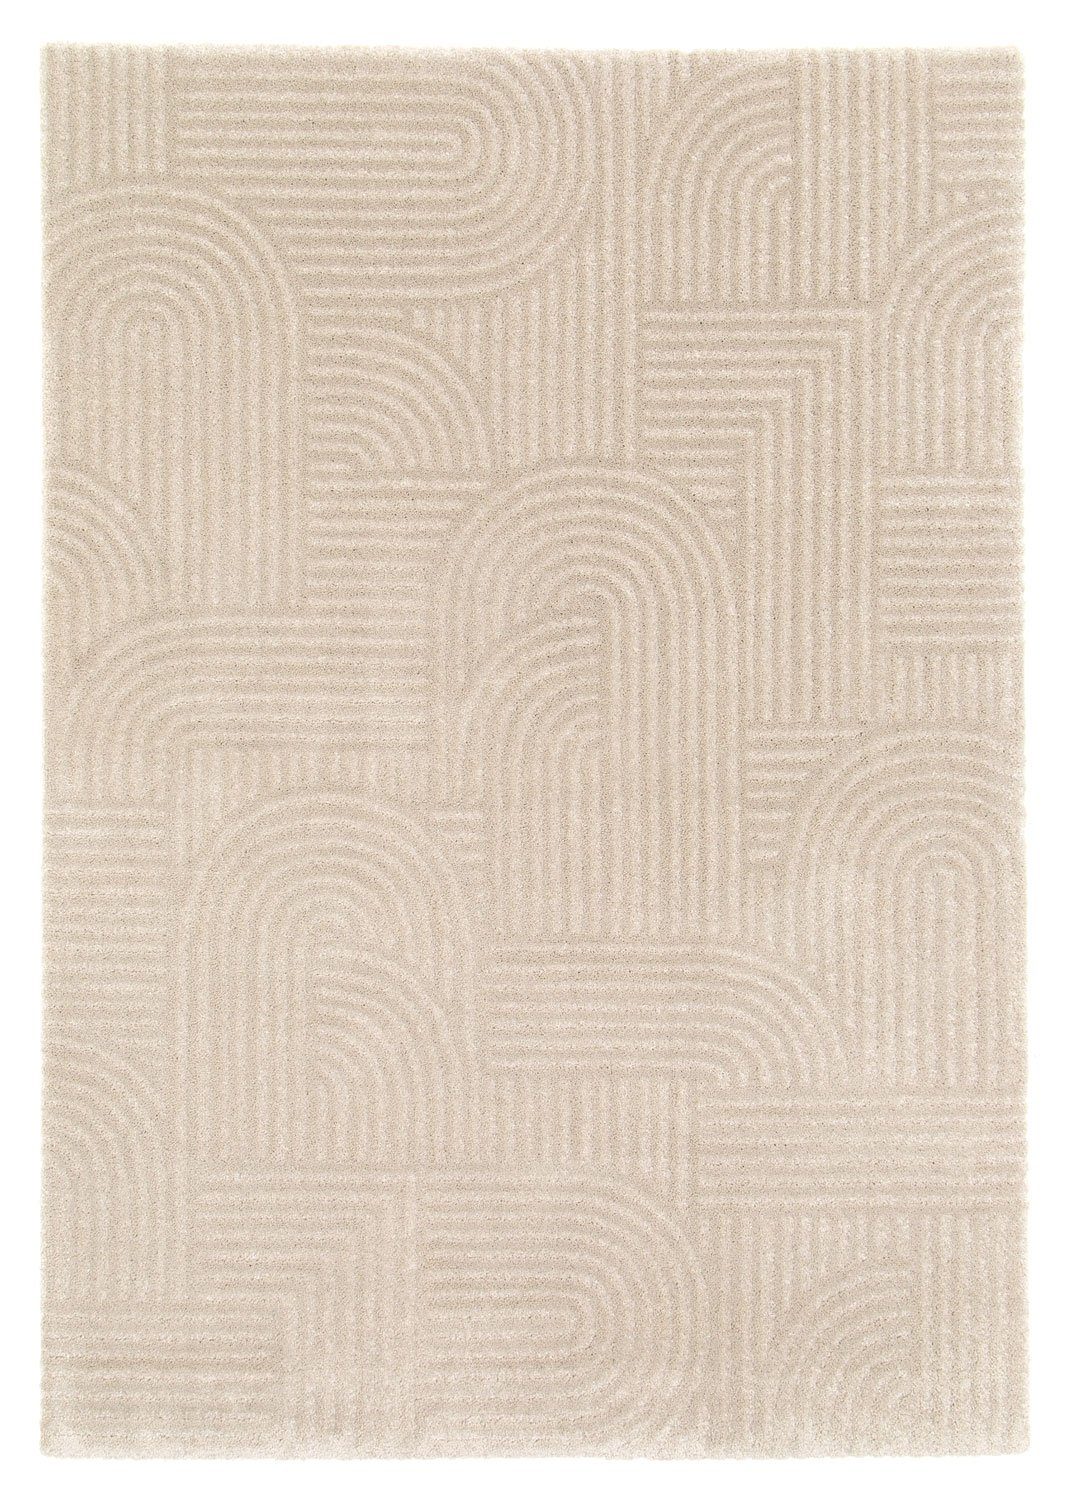 Teppich MOON, Polypropylen, Beige, 160 x 230 cm, Gemustert, Balta Rugs, quadratisch, Höhe: 17 mm